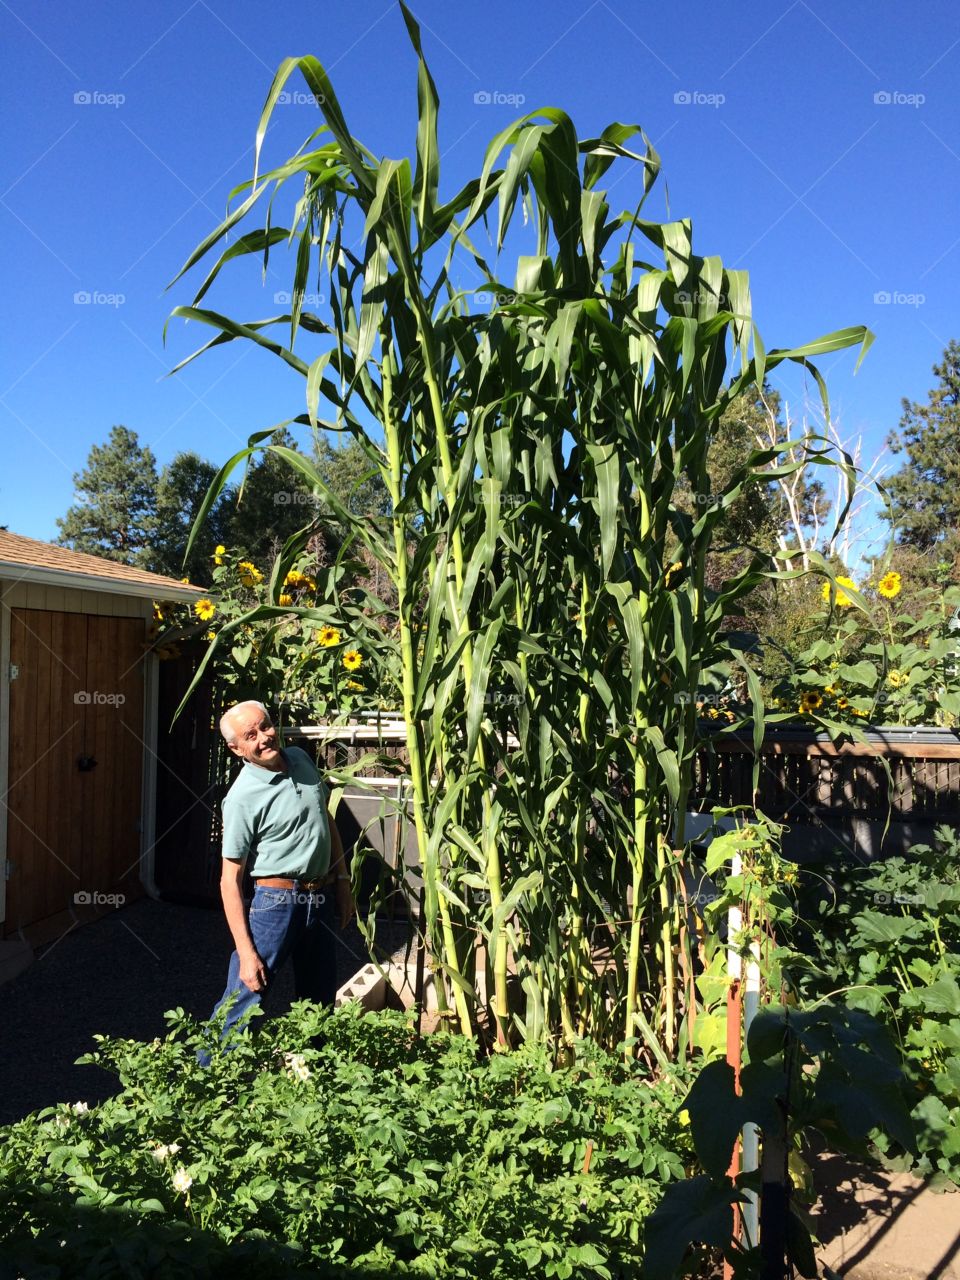 Corn. Very tall corn 